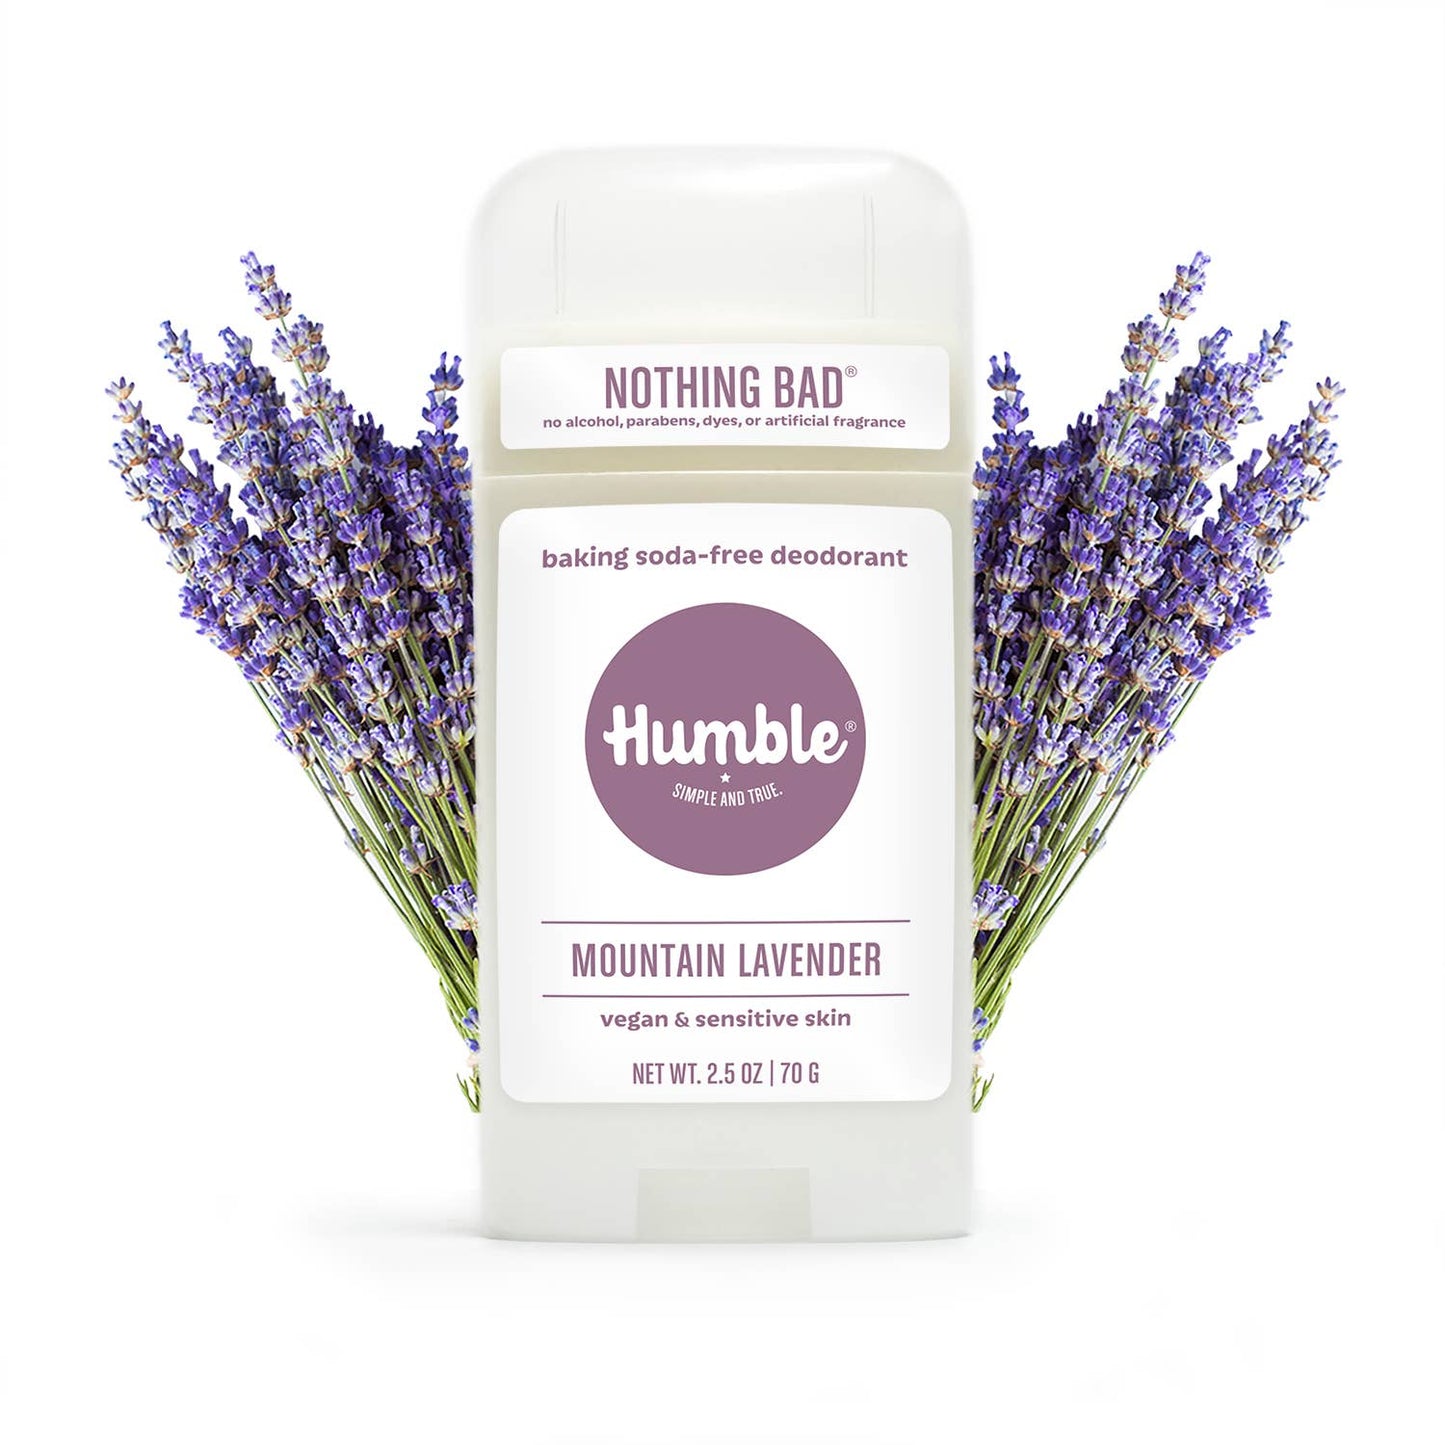 Humble Brands, Inc. - Sensitive Skin/Vegan Mountain Lavender